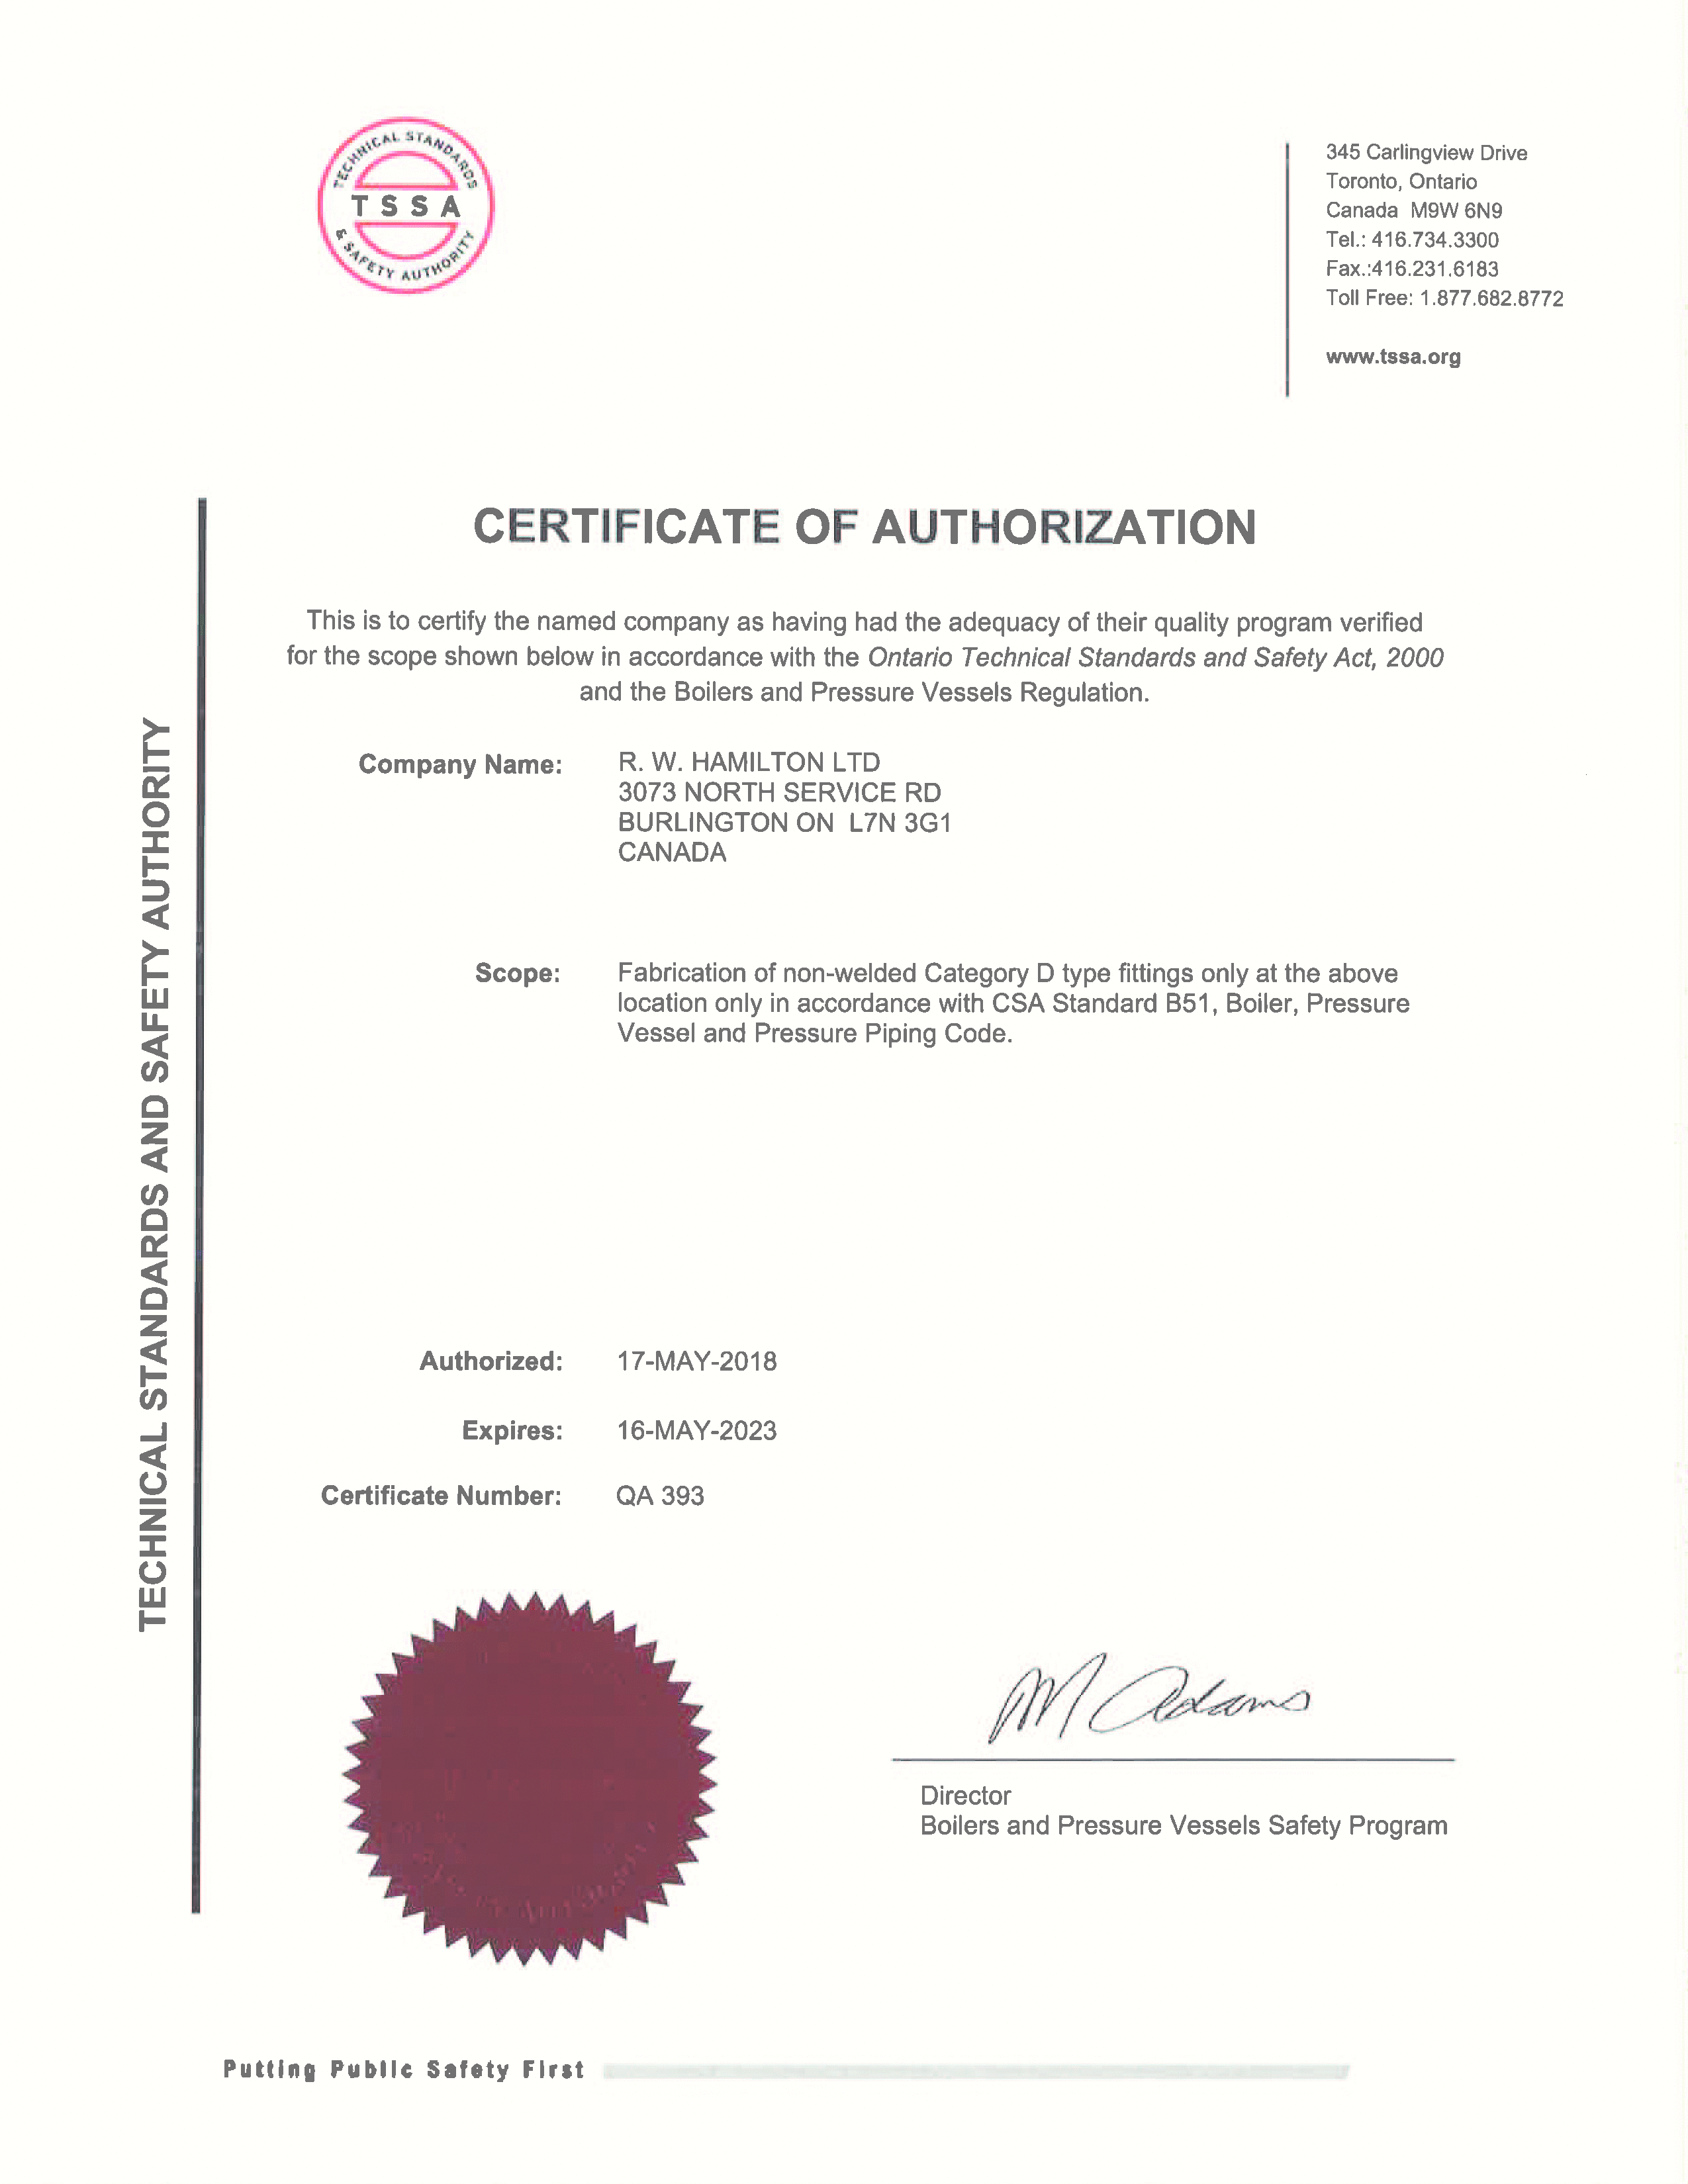 TSSA Certificate of Authorization